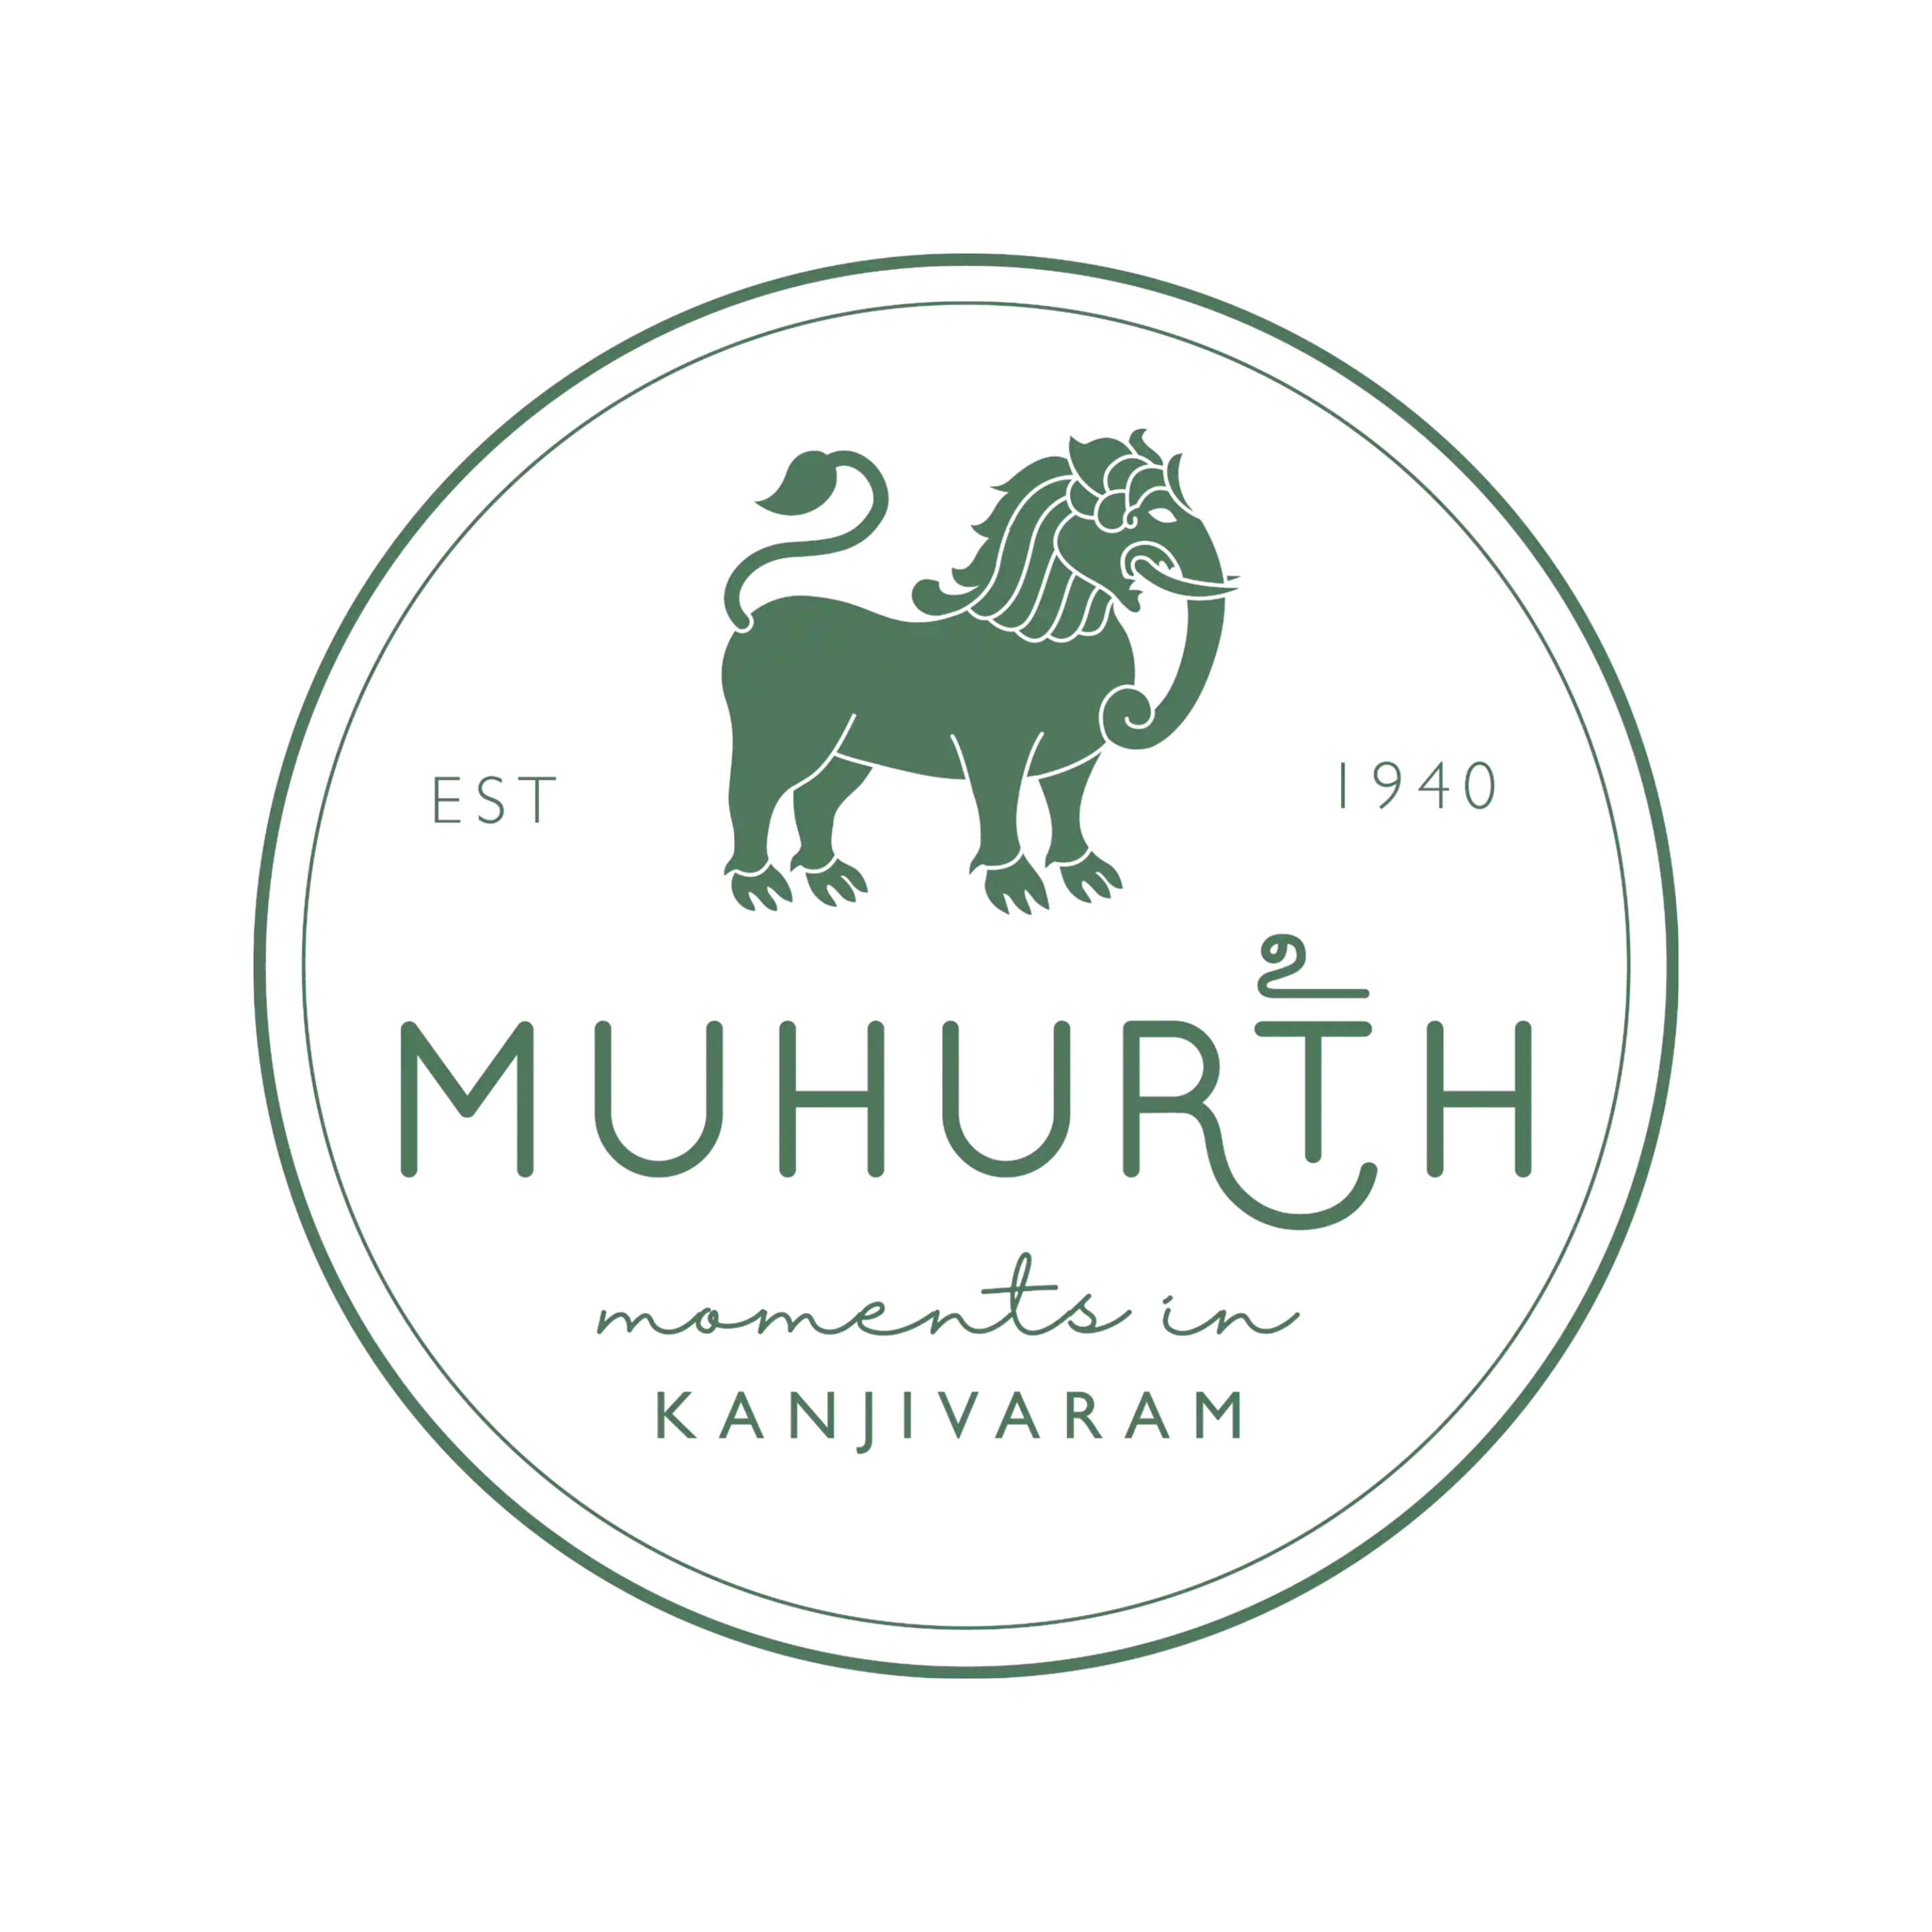 Muhurth